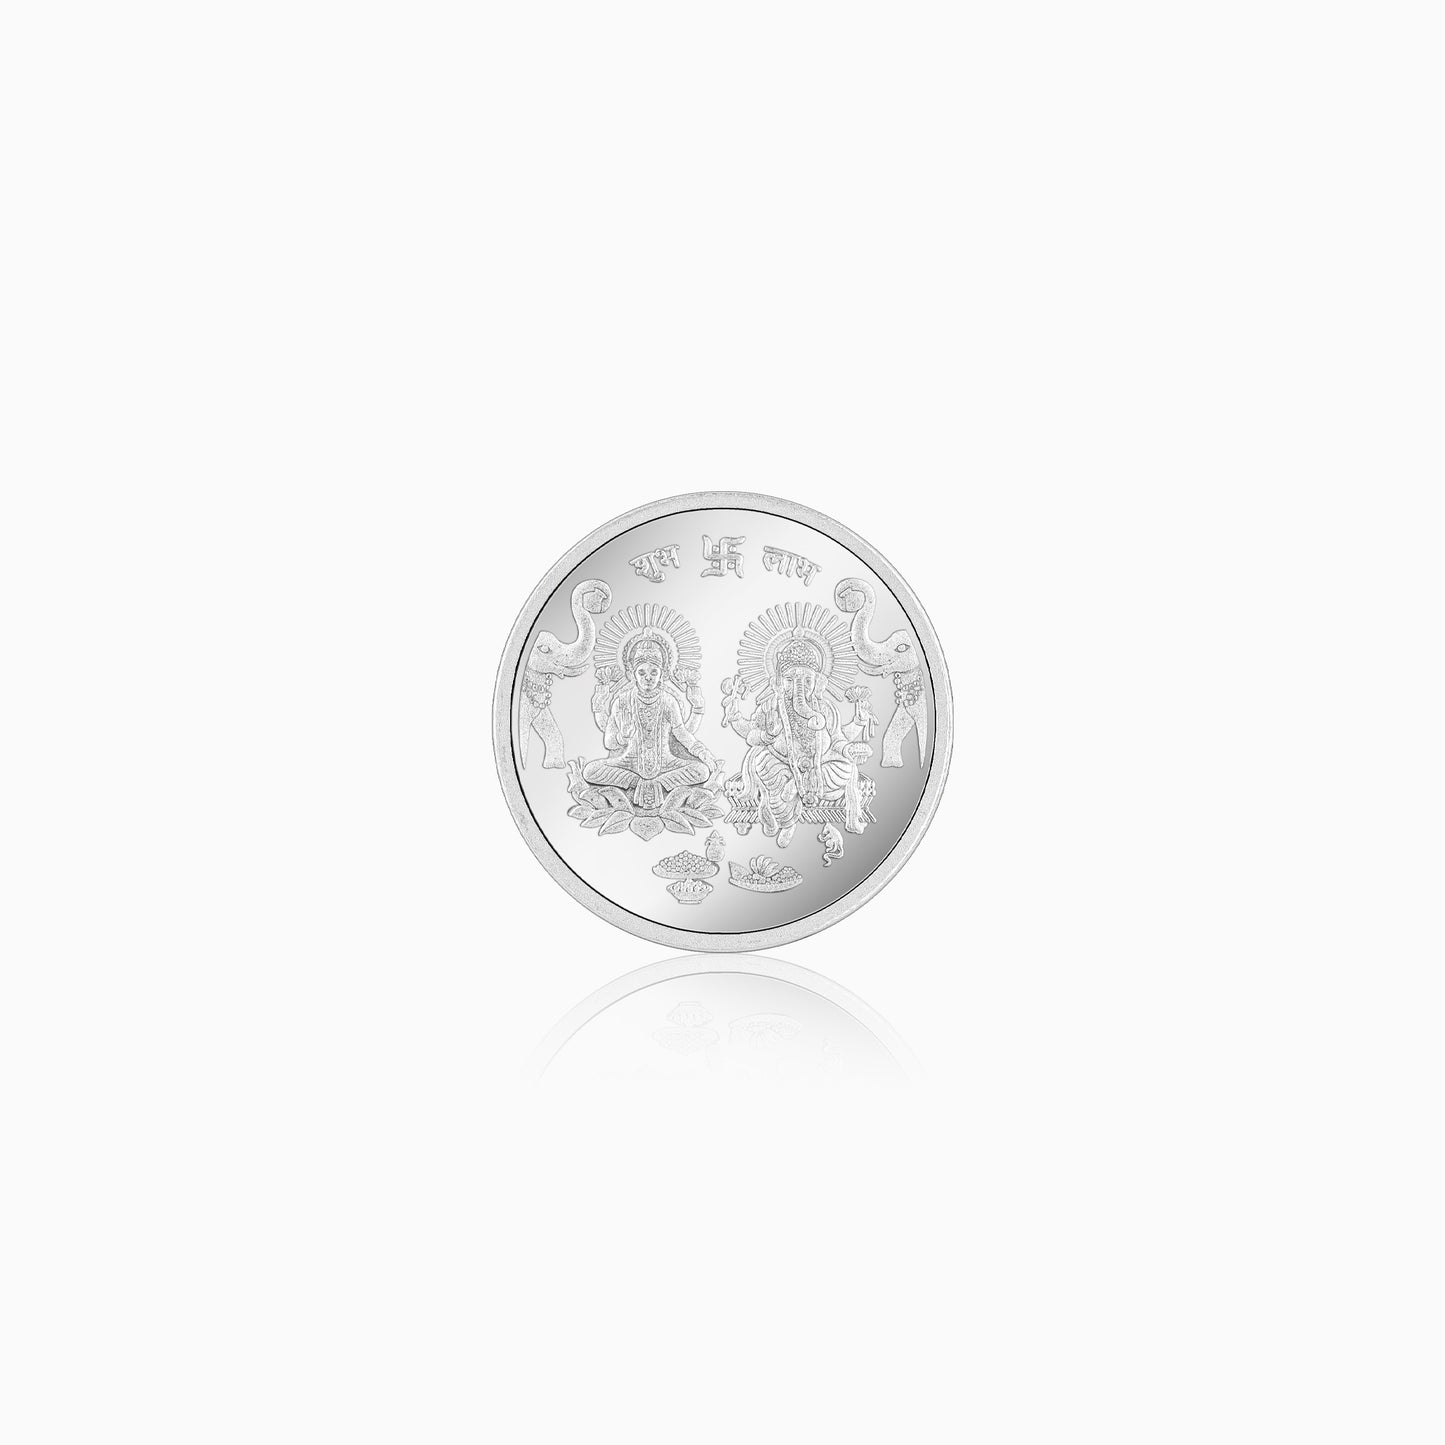 Goddess Lakshmi and Lord Ganesh Silver Coin - 5 g